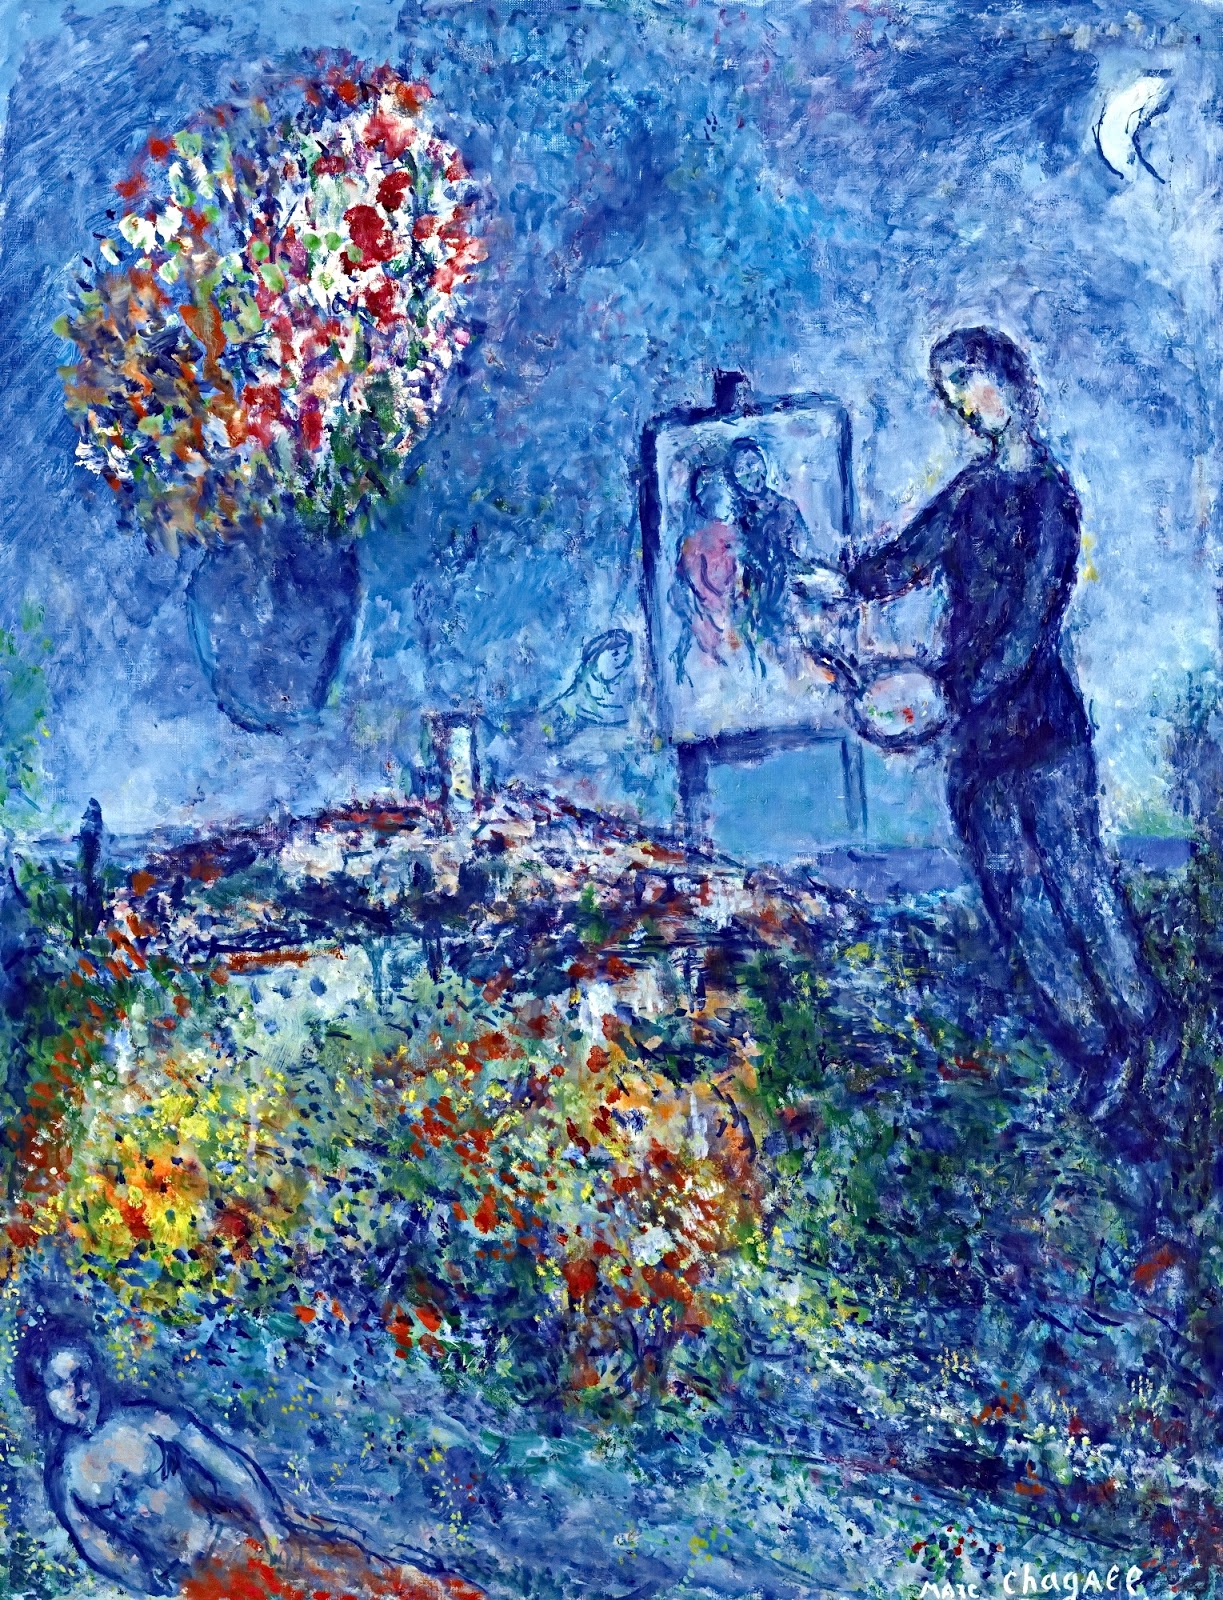 Marc+Chagall-1887-1985 (308).jpg